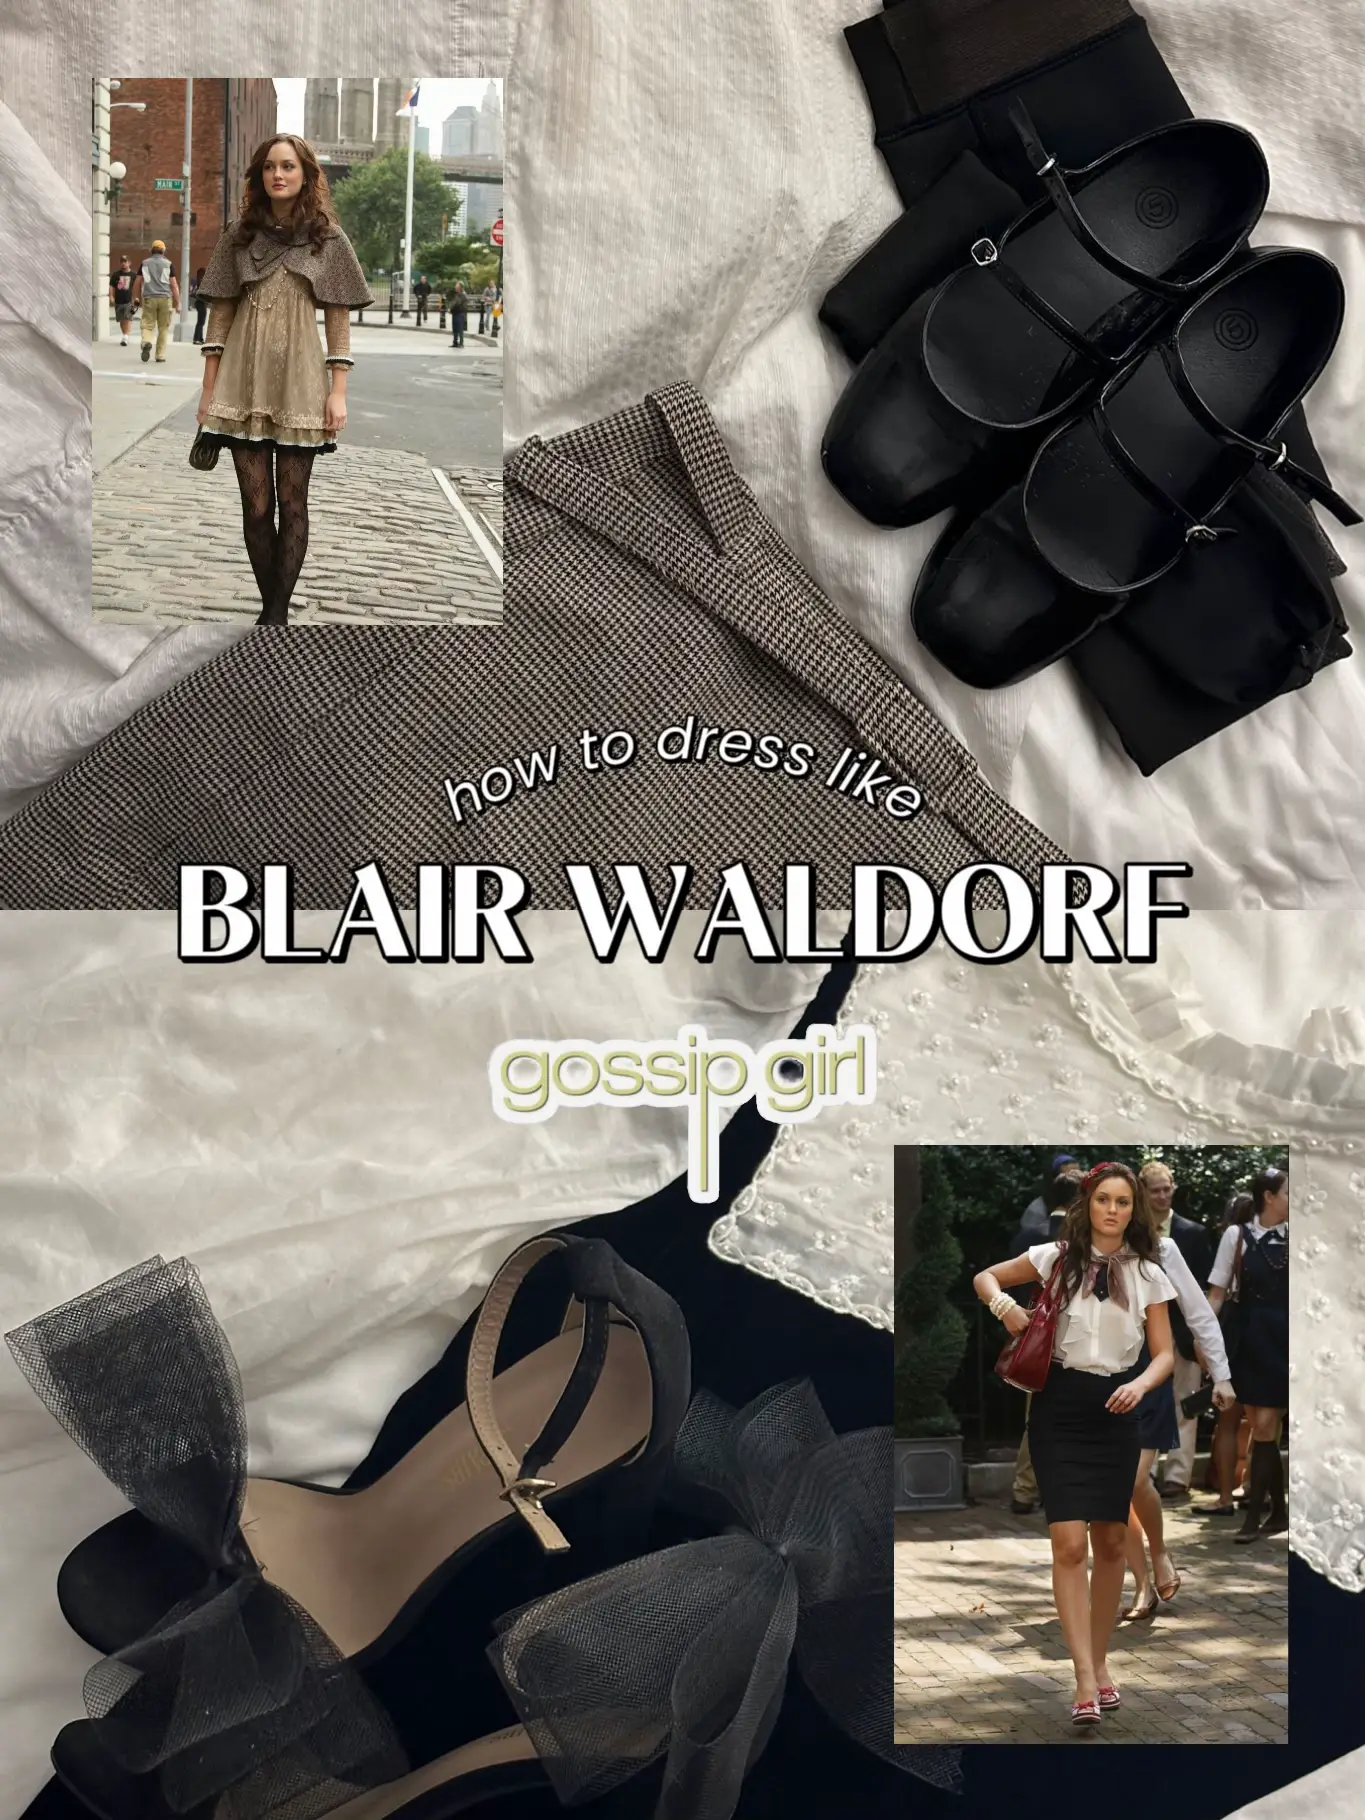 10 Reasons Why Gossip Girl's Blair Waldorf Is Better Than Regina